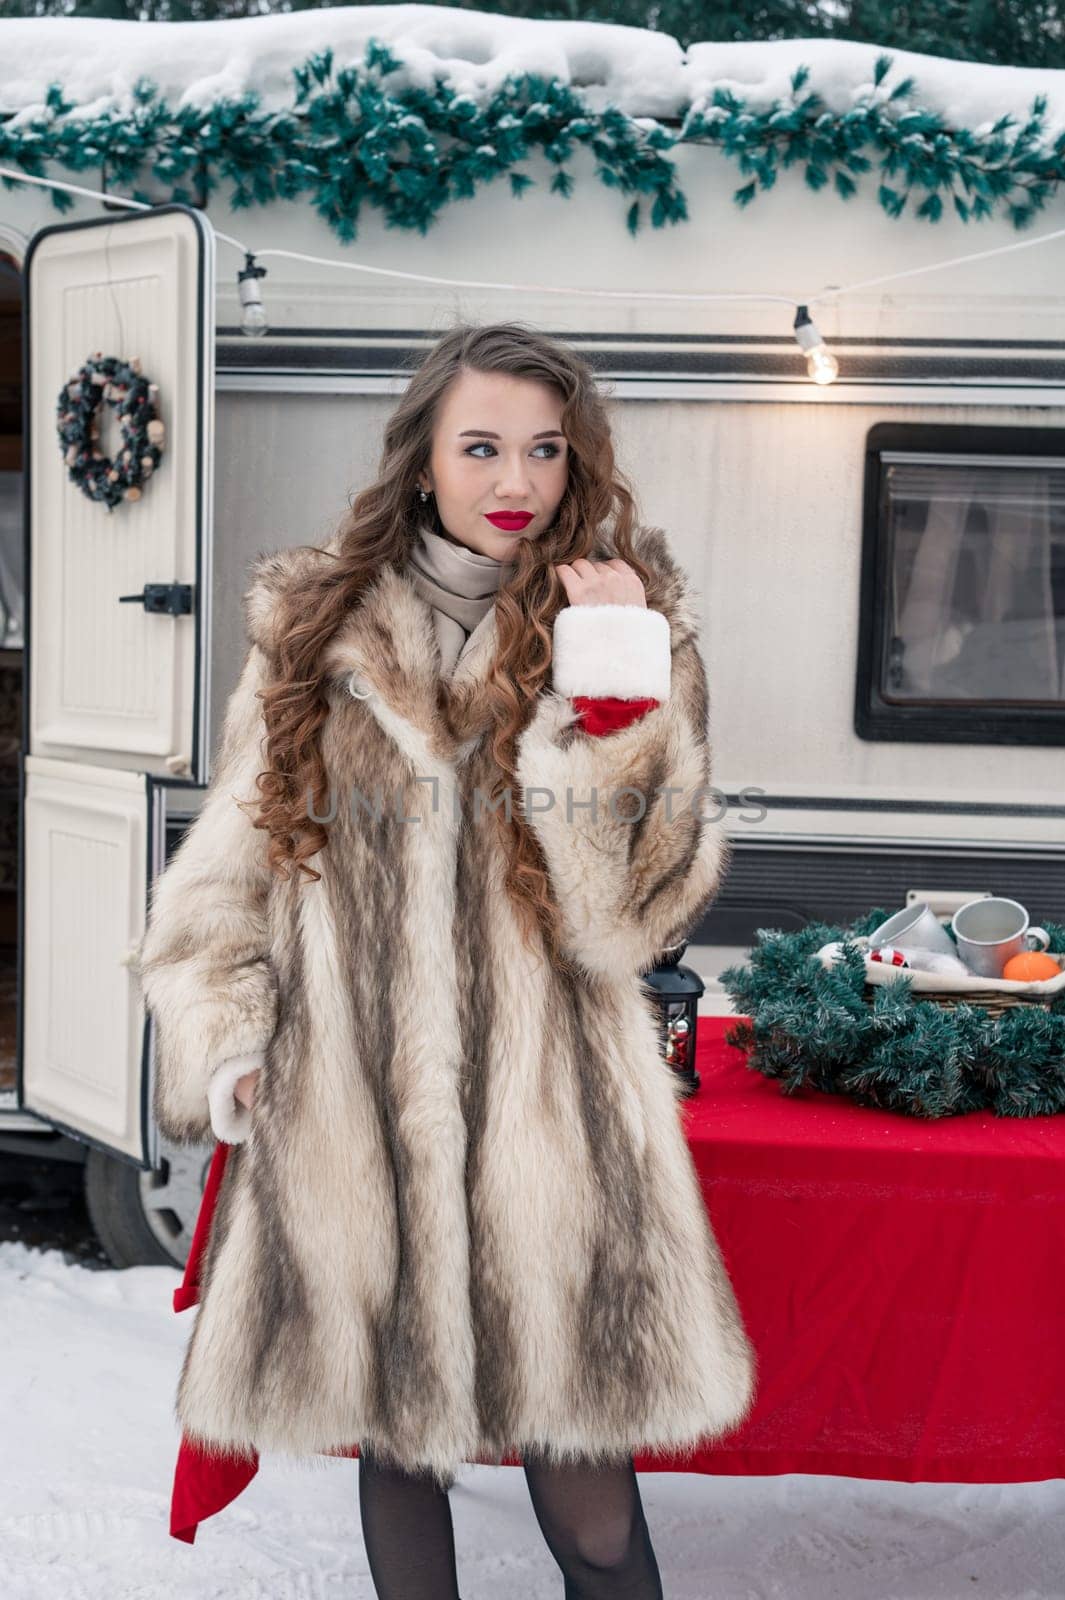 Young woman in fur coat at winter campsite by rusak